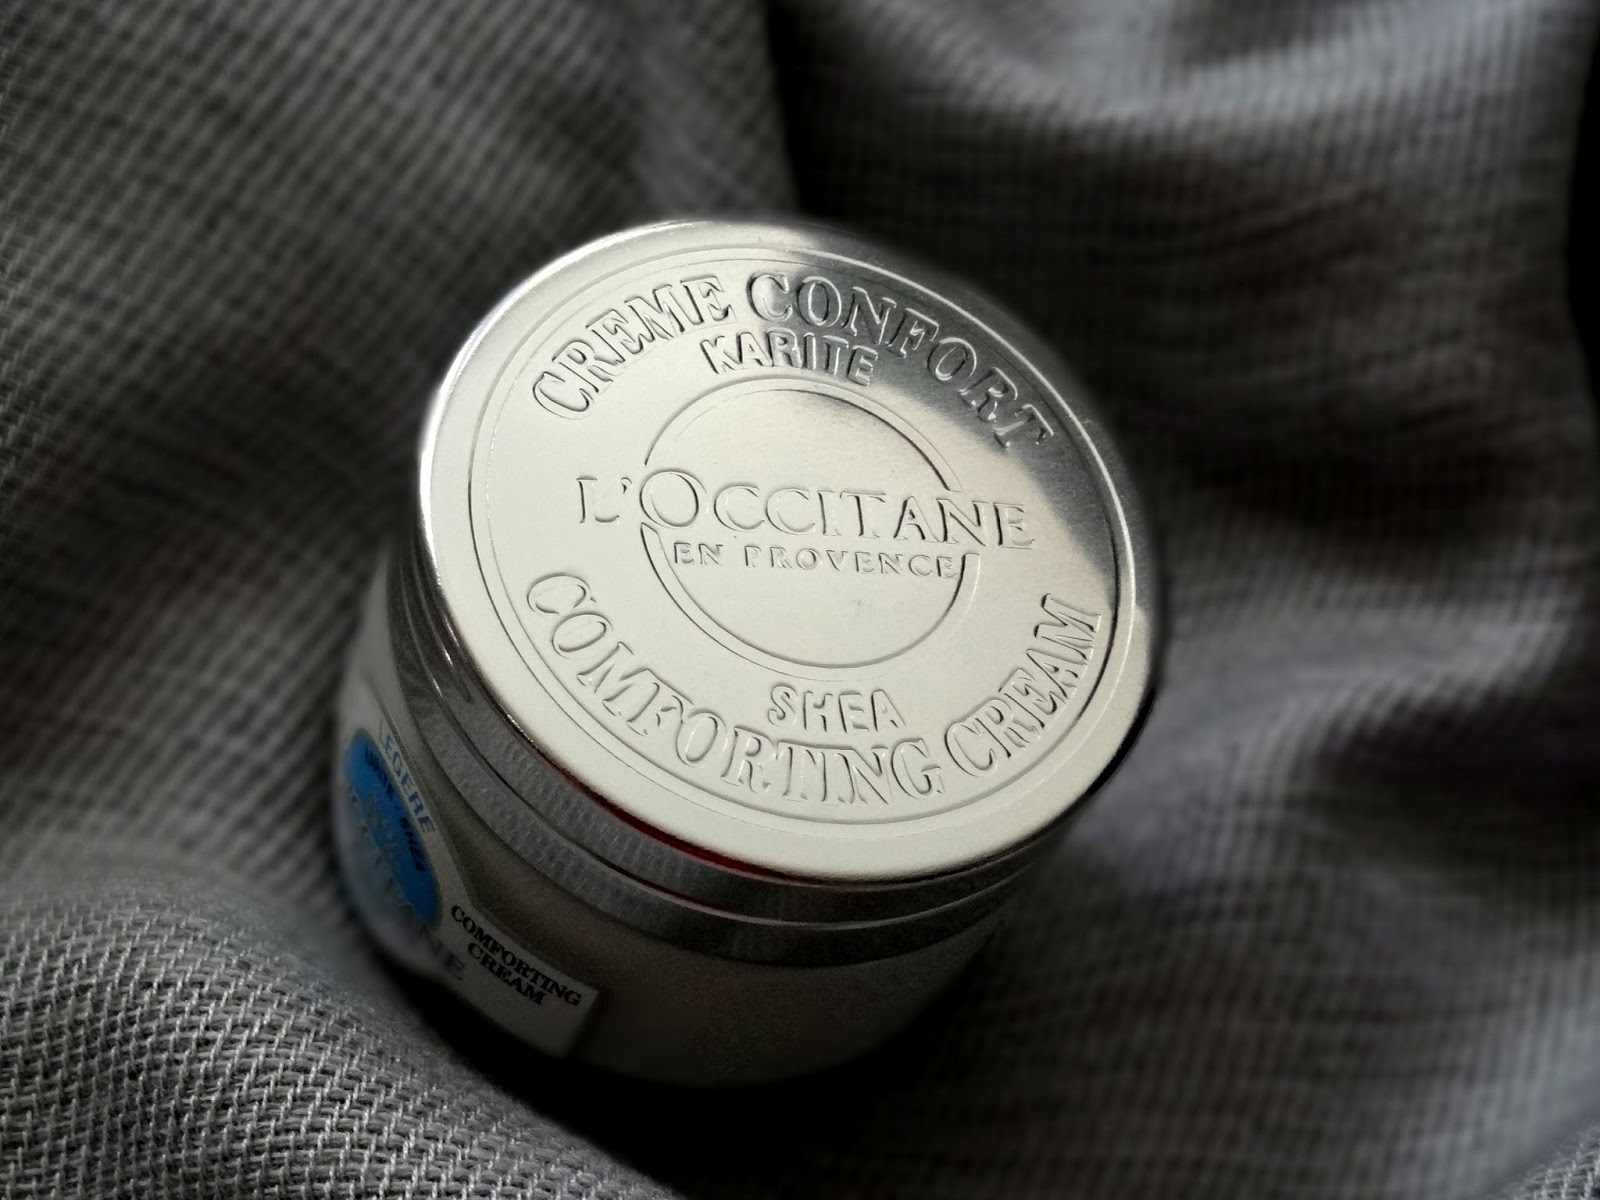 L'Occitane Shea Butter Light Comforting Cream Review, Photos